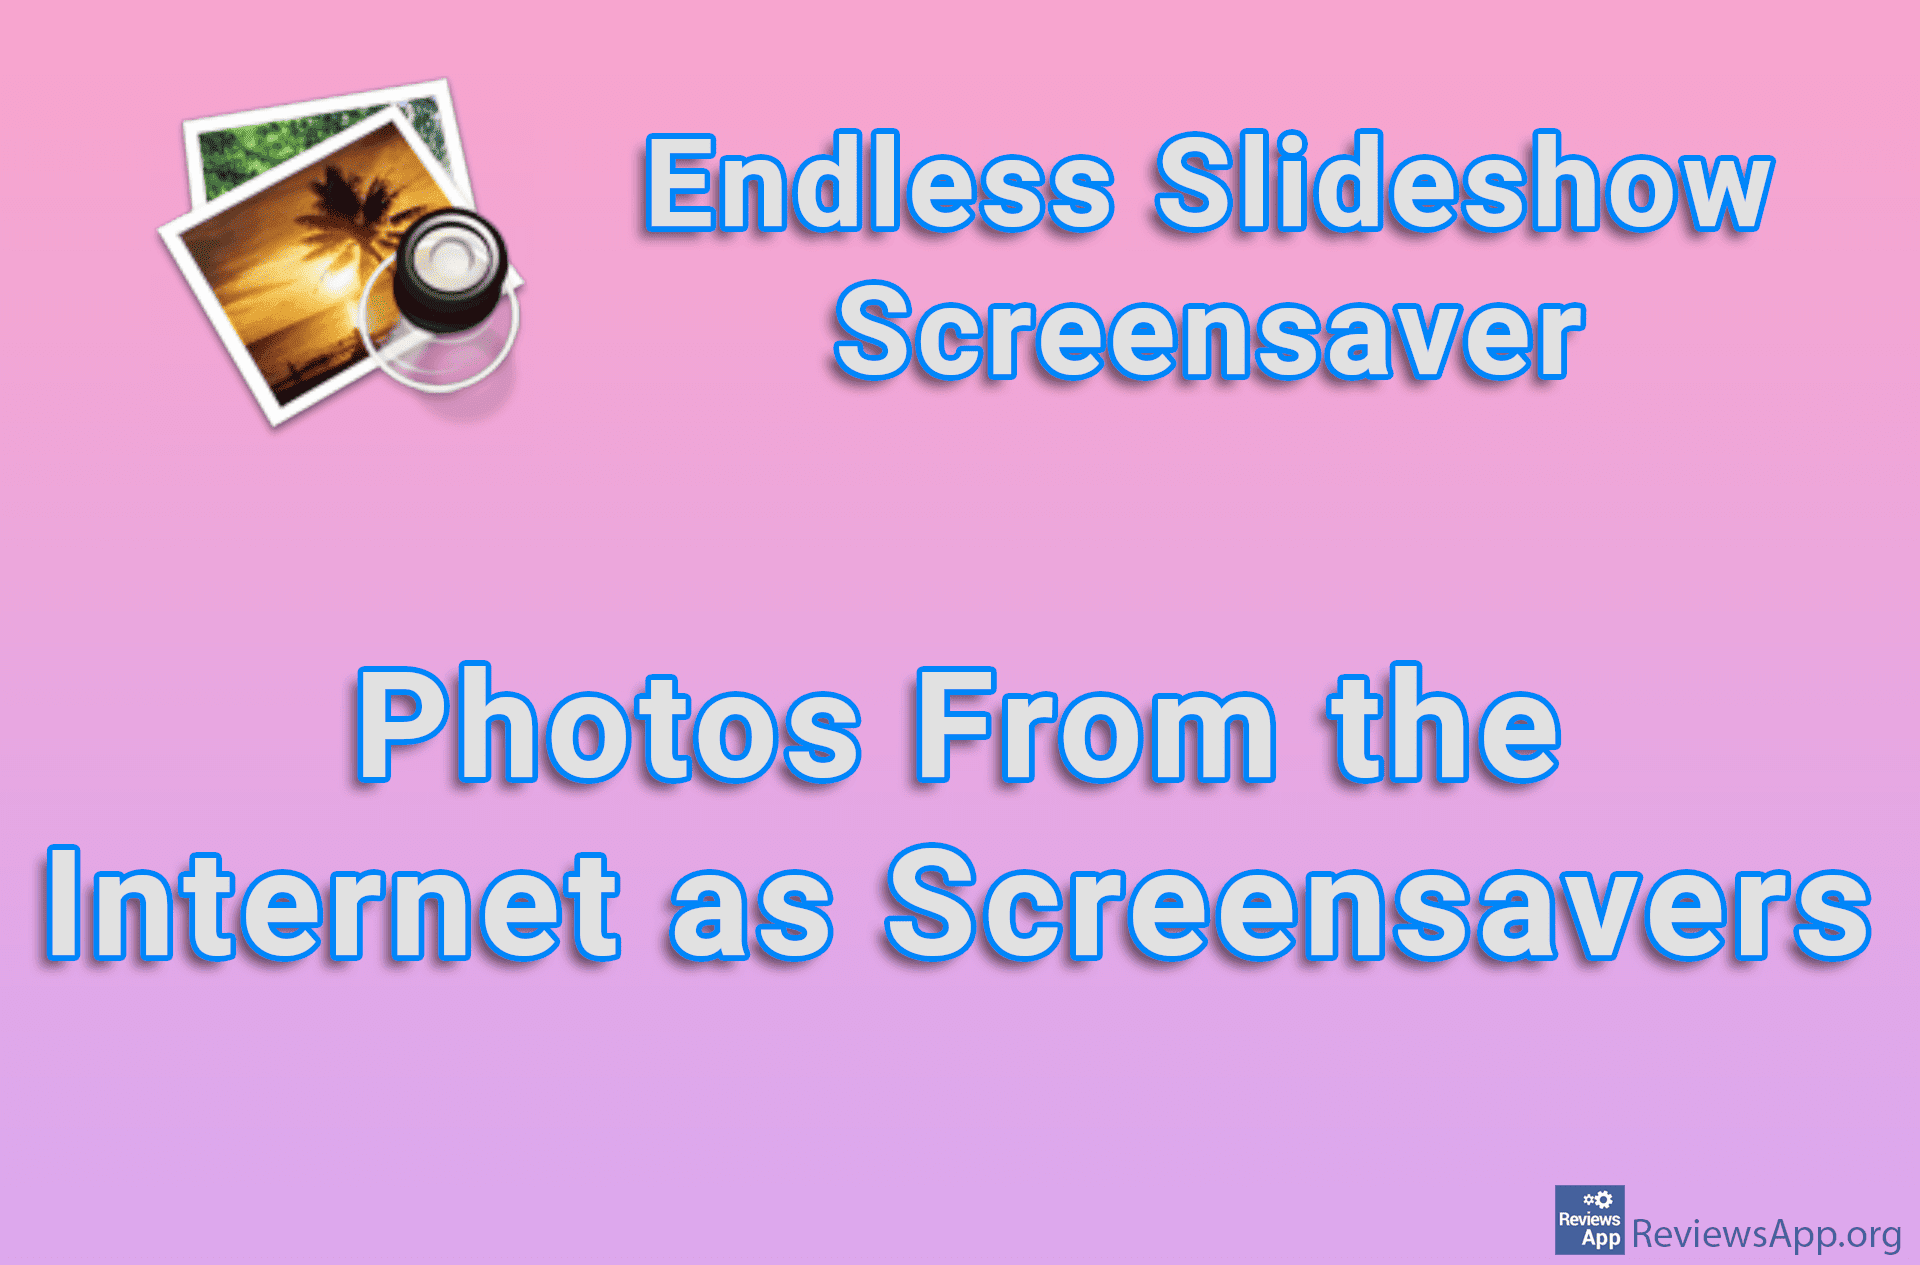 Endless Slideshow Screensaver – Photos From the Internet as Screensavers